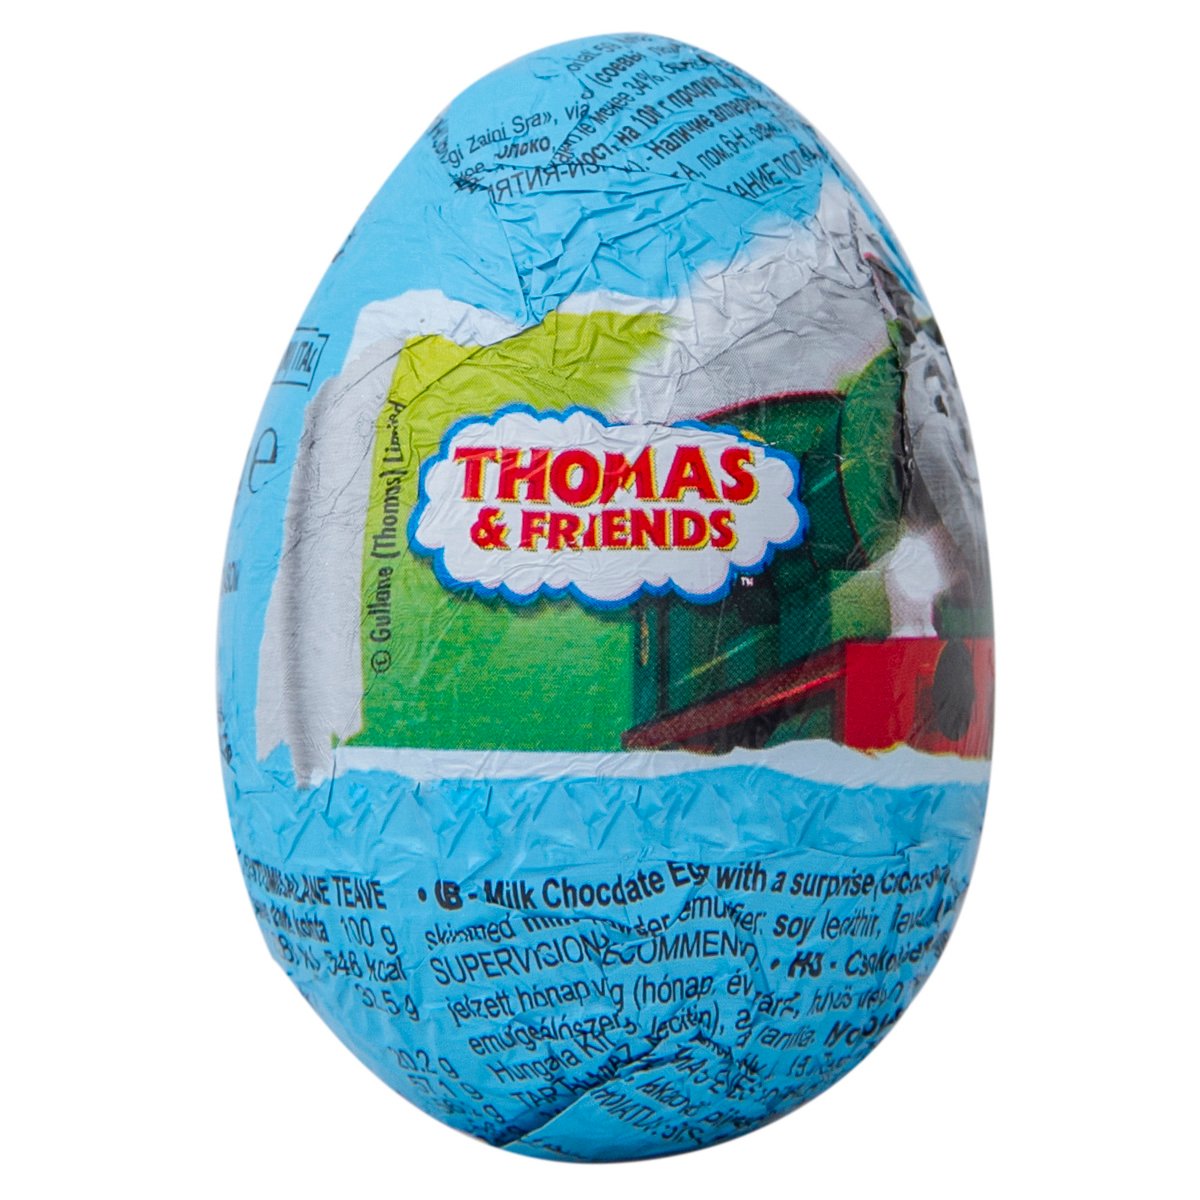 Thomas & Friends Chocolate Eggs 20 g